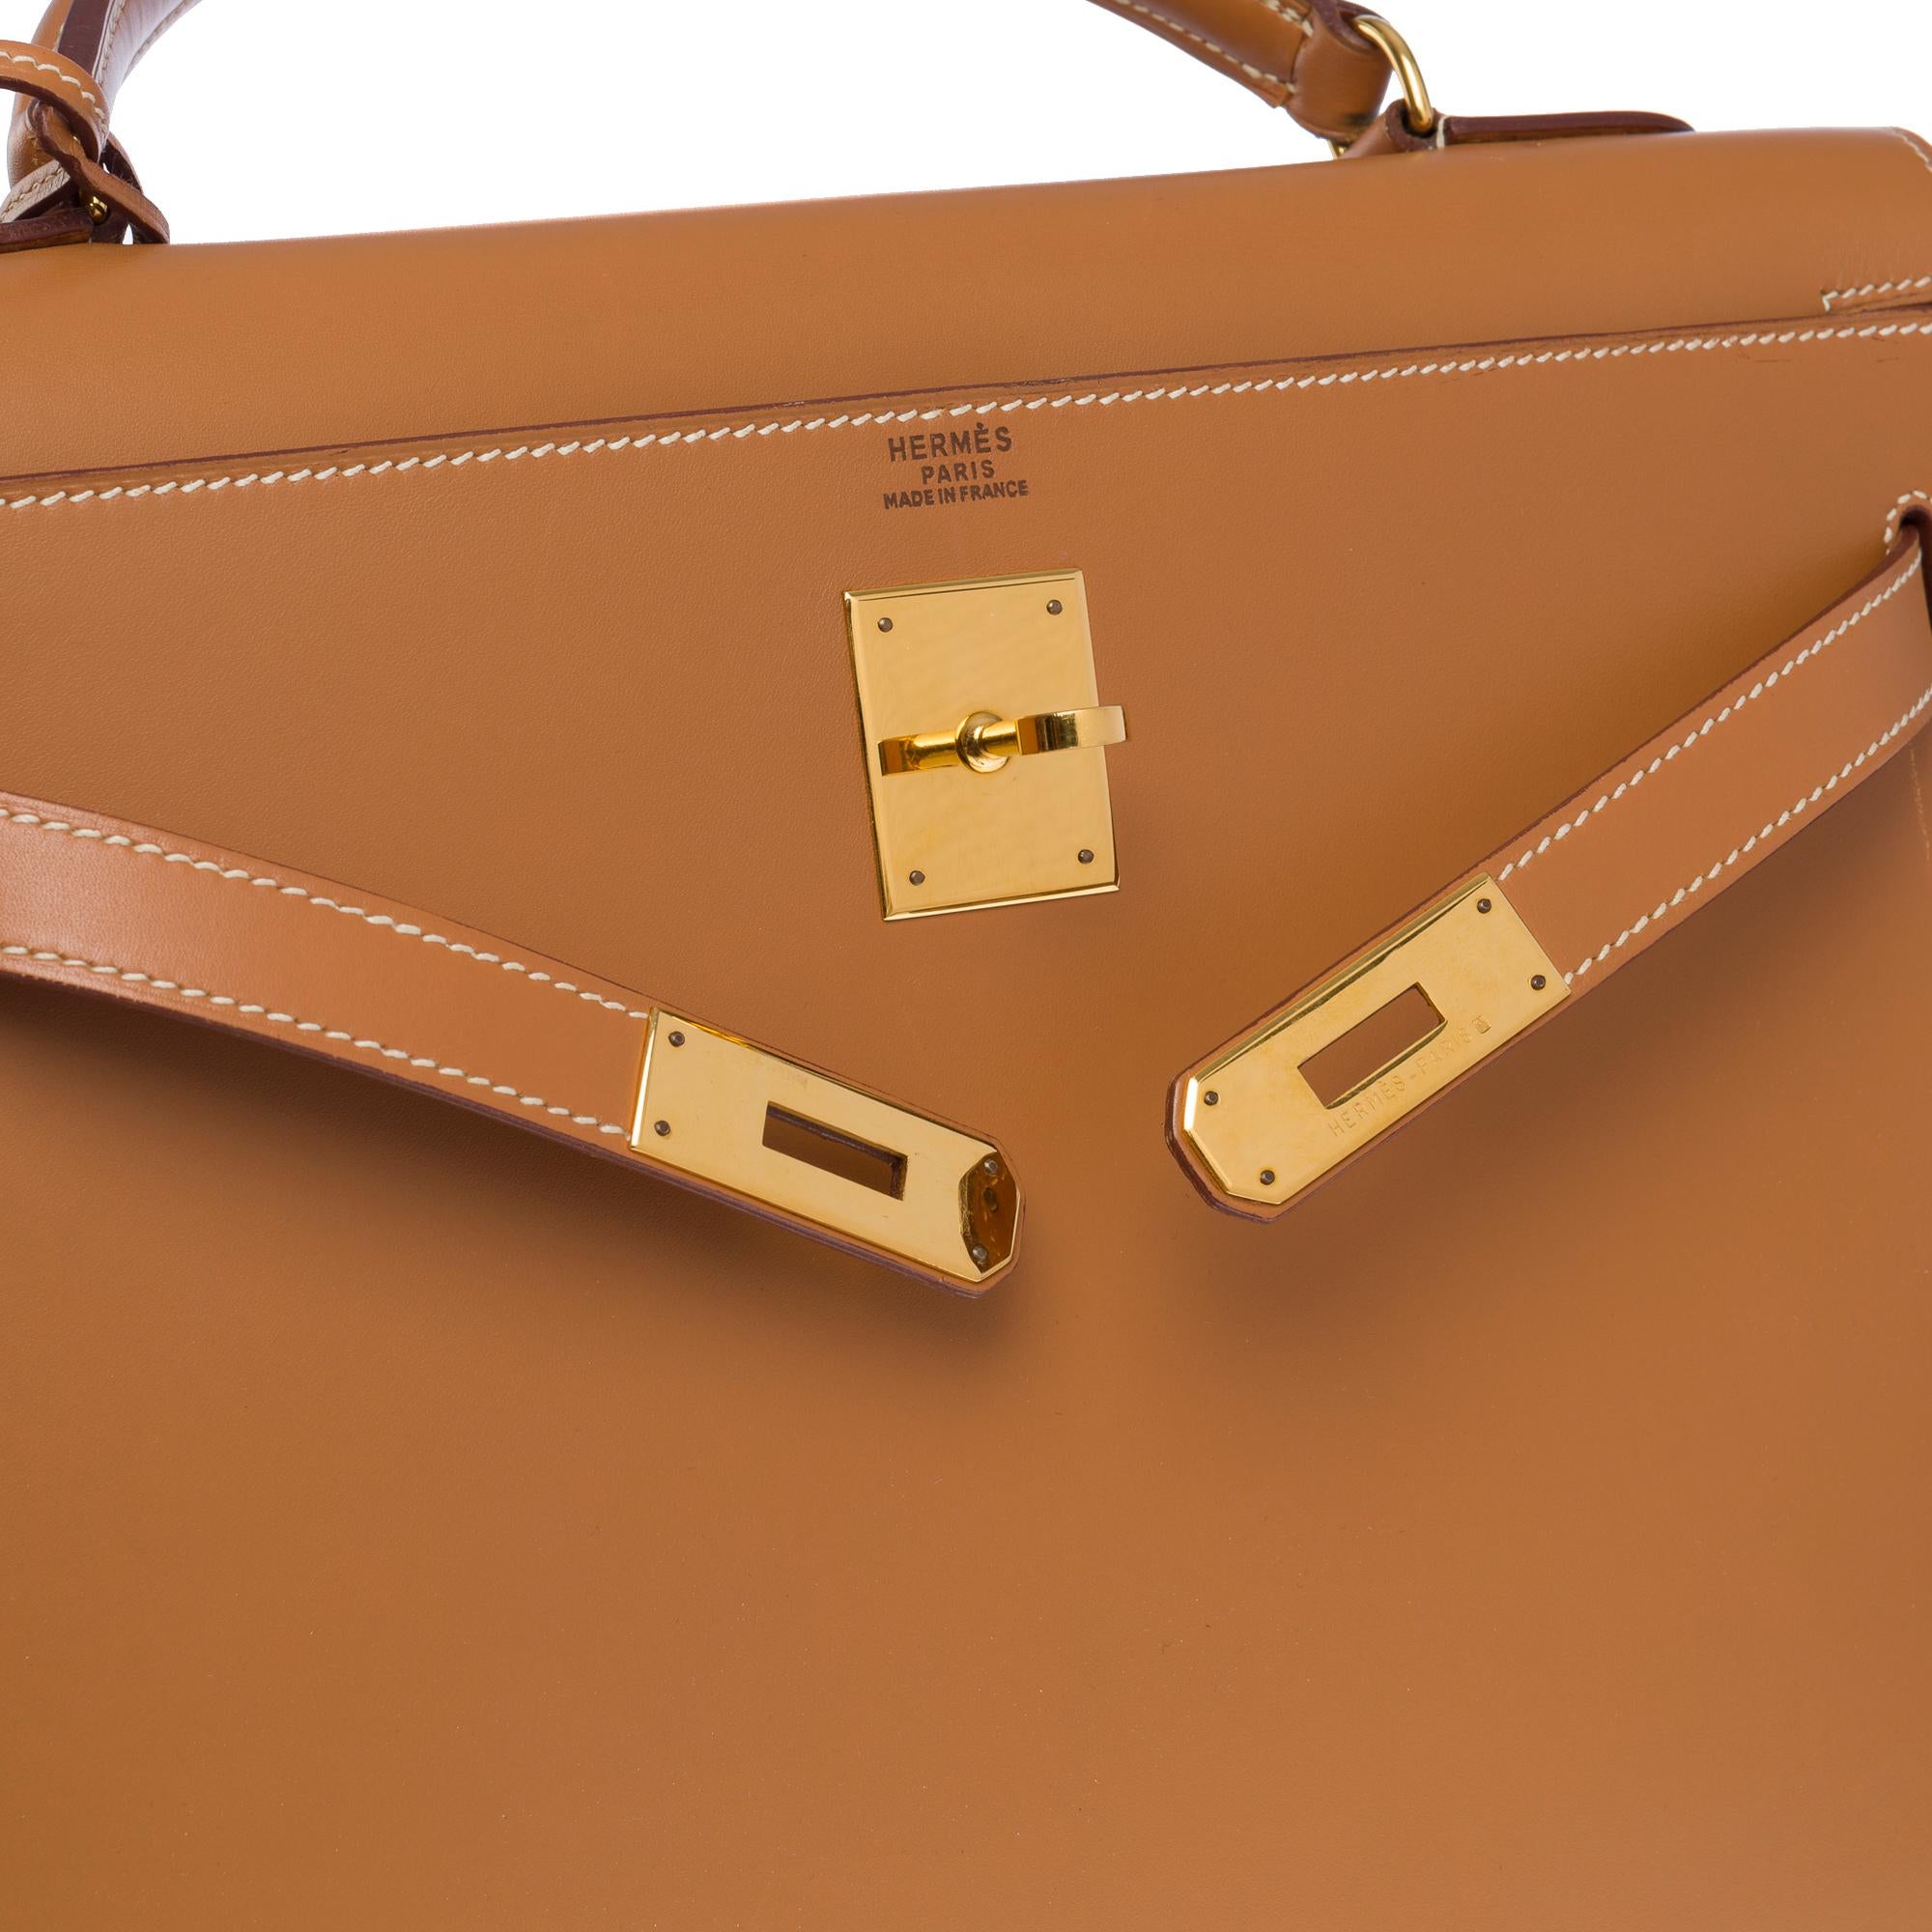 Very Rare Hermès Kelly 32 sellier handbag strap in Gold Chamonix leather , GHW 2